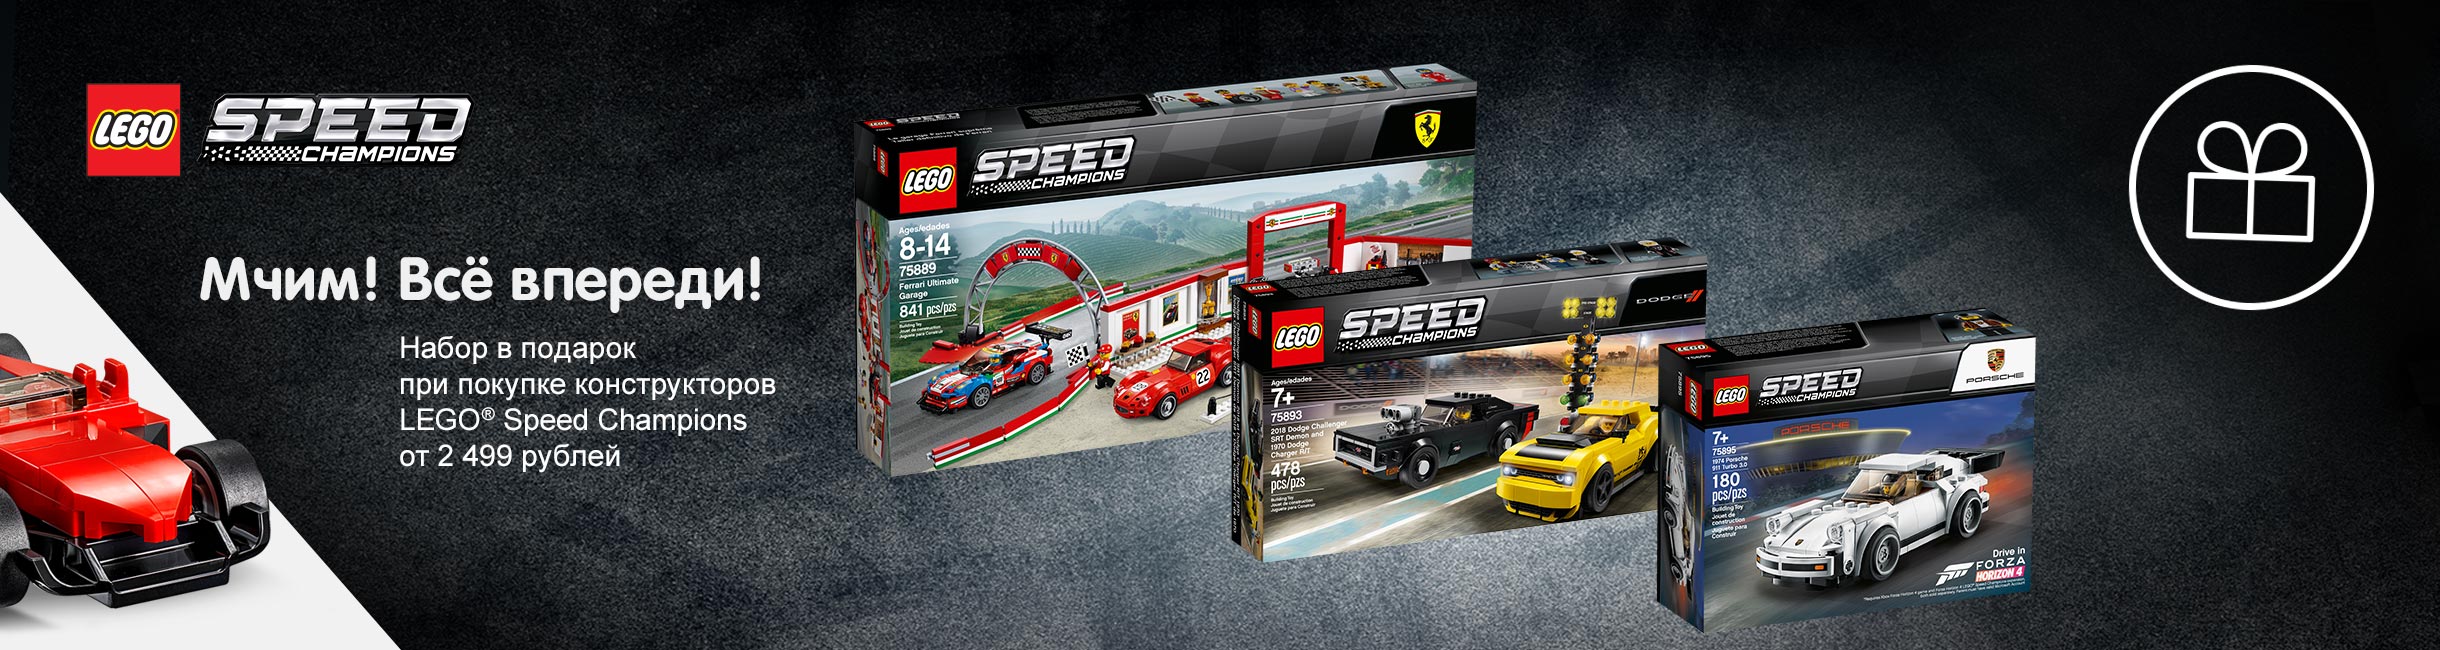 Рекламная акция Лего (LEGO) «Мчим! Всё впереди!»